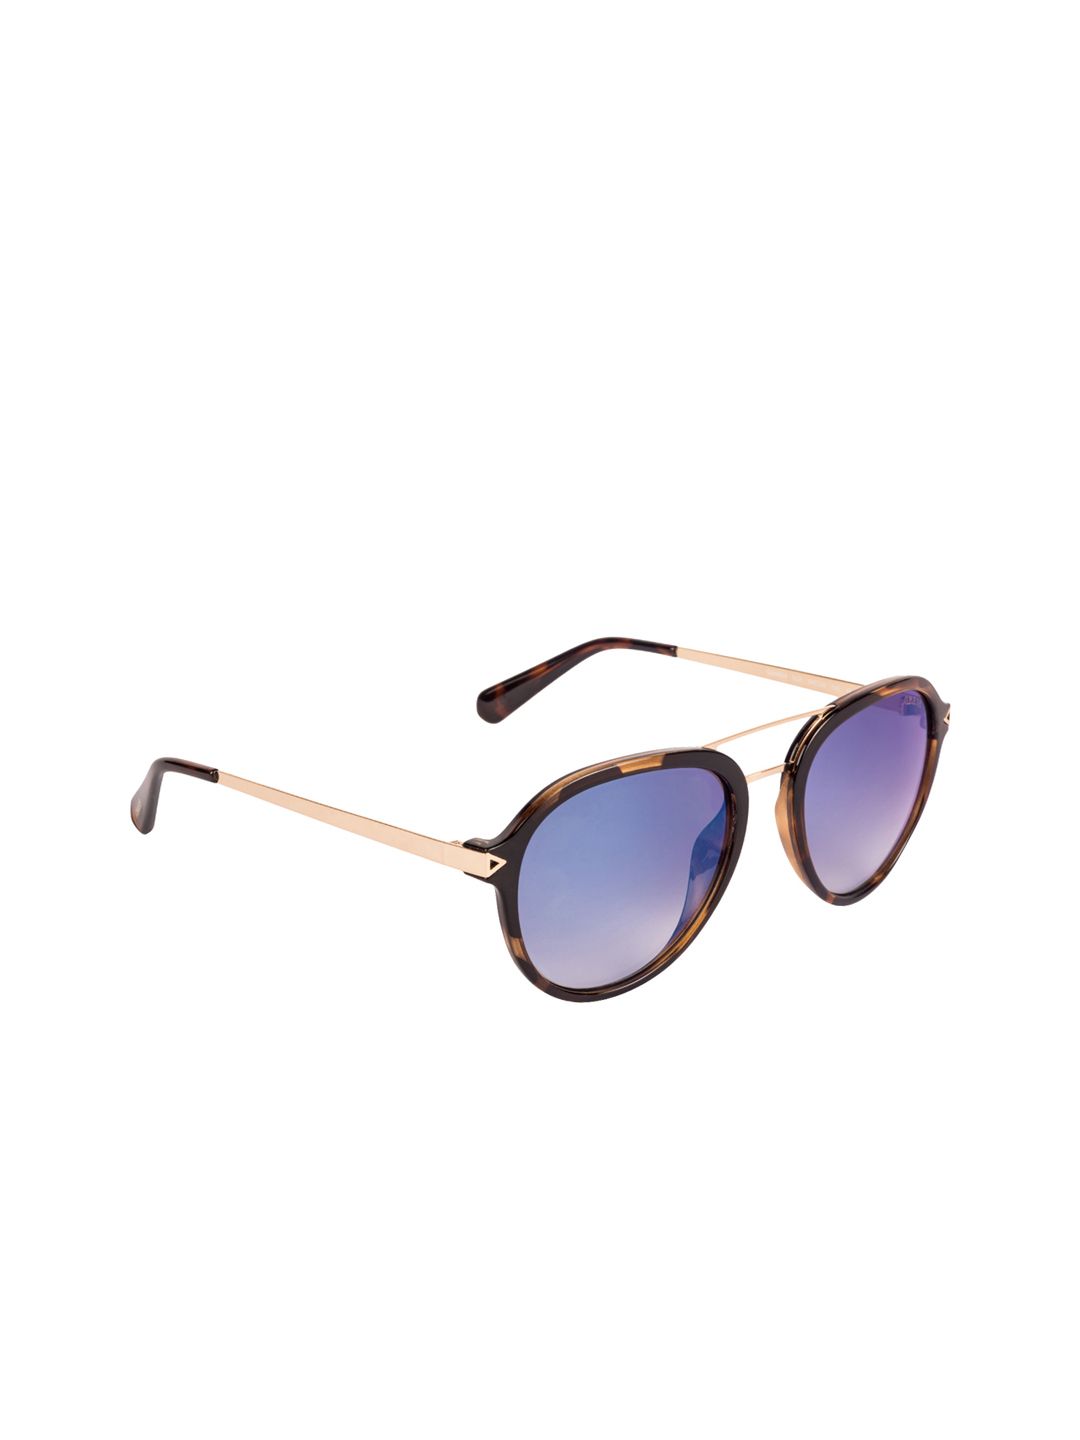 GUESS Women Oval Sunglasses GU6924 54 52X Price in India